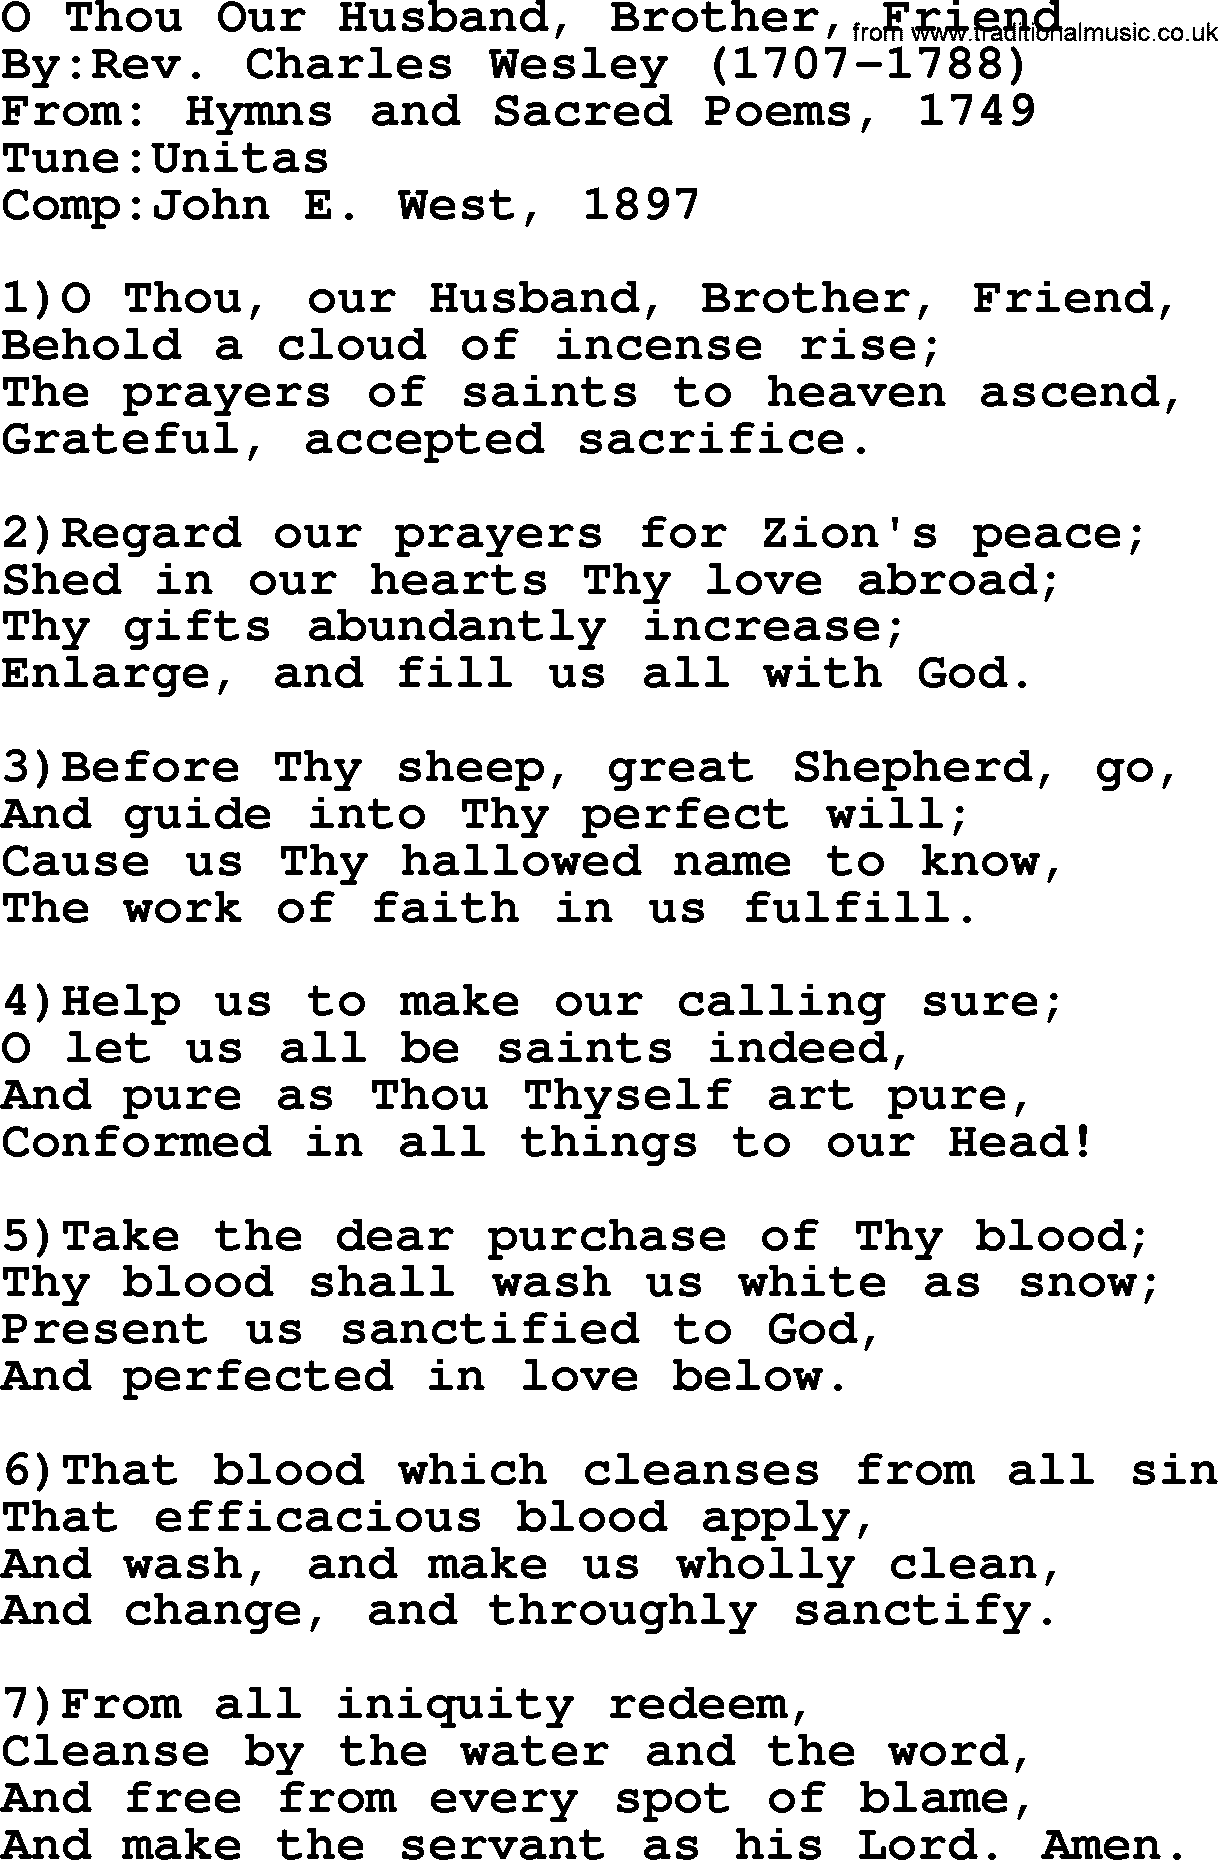 Methodist Hymn: O Thou Our Husband, Brother, Friend, lyrics